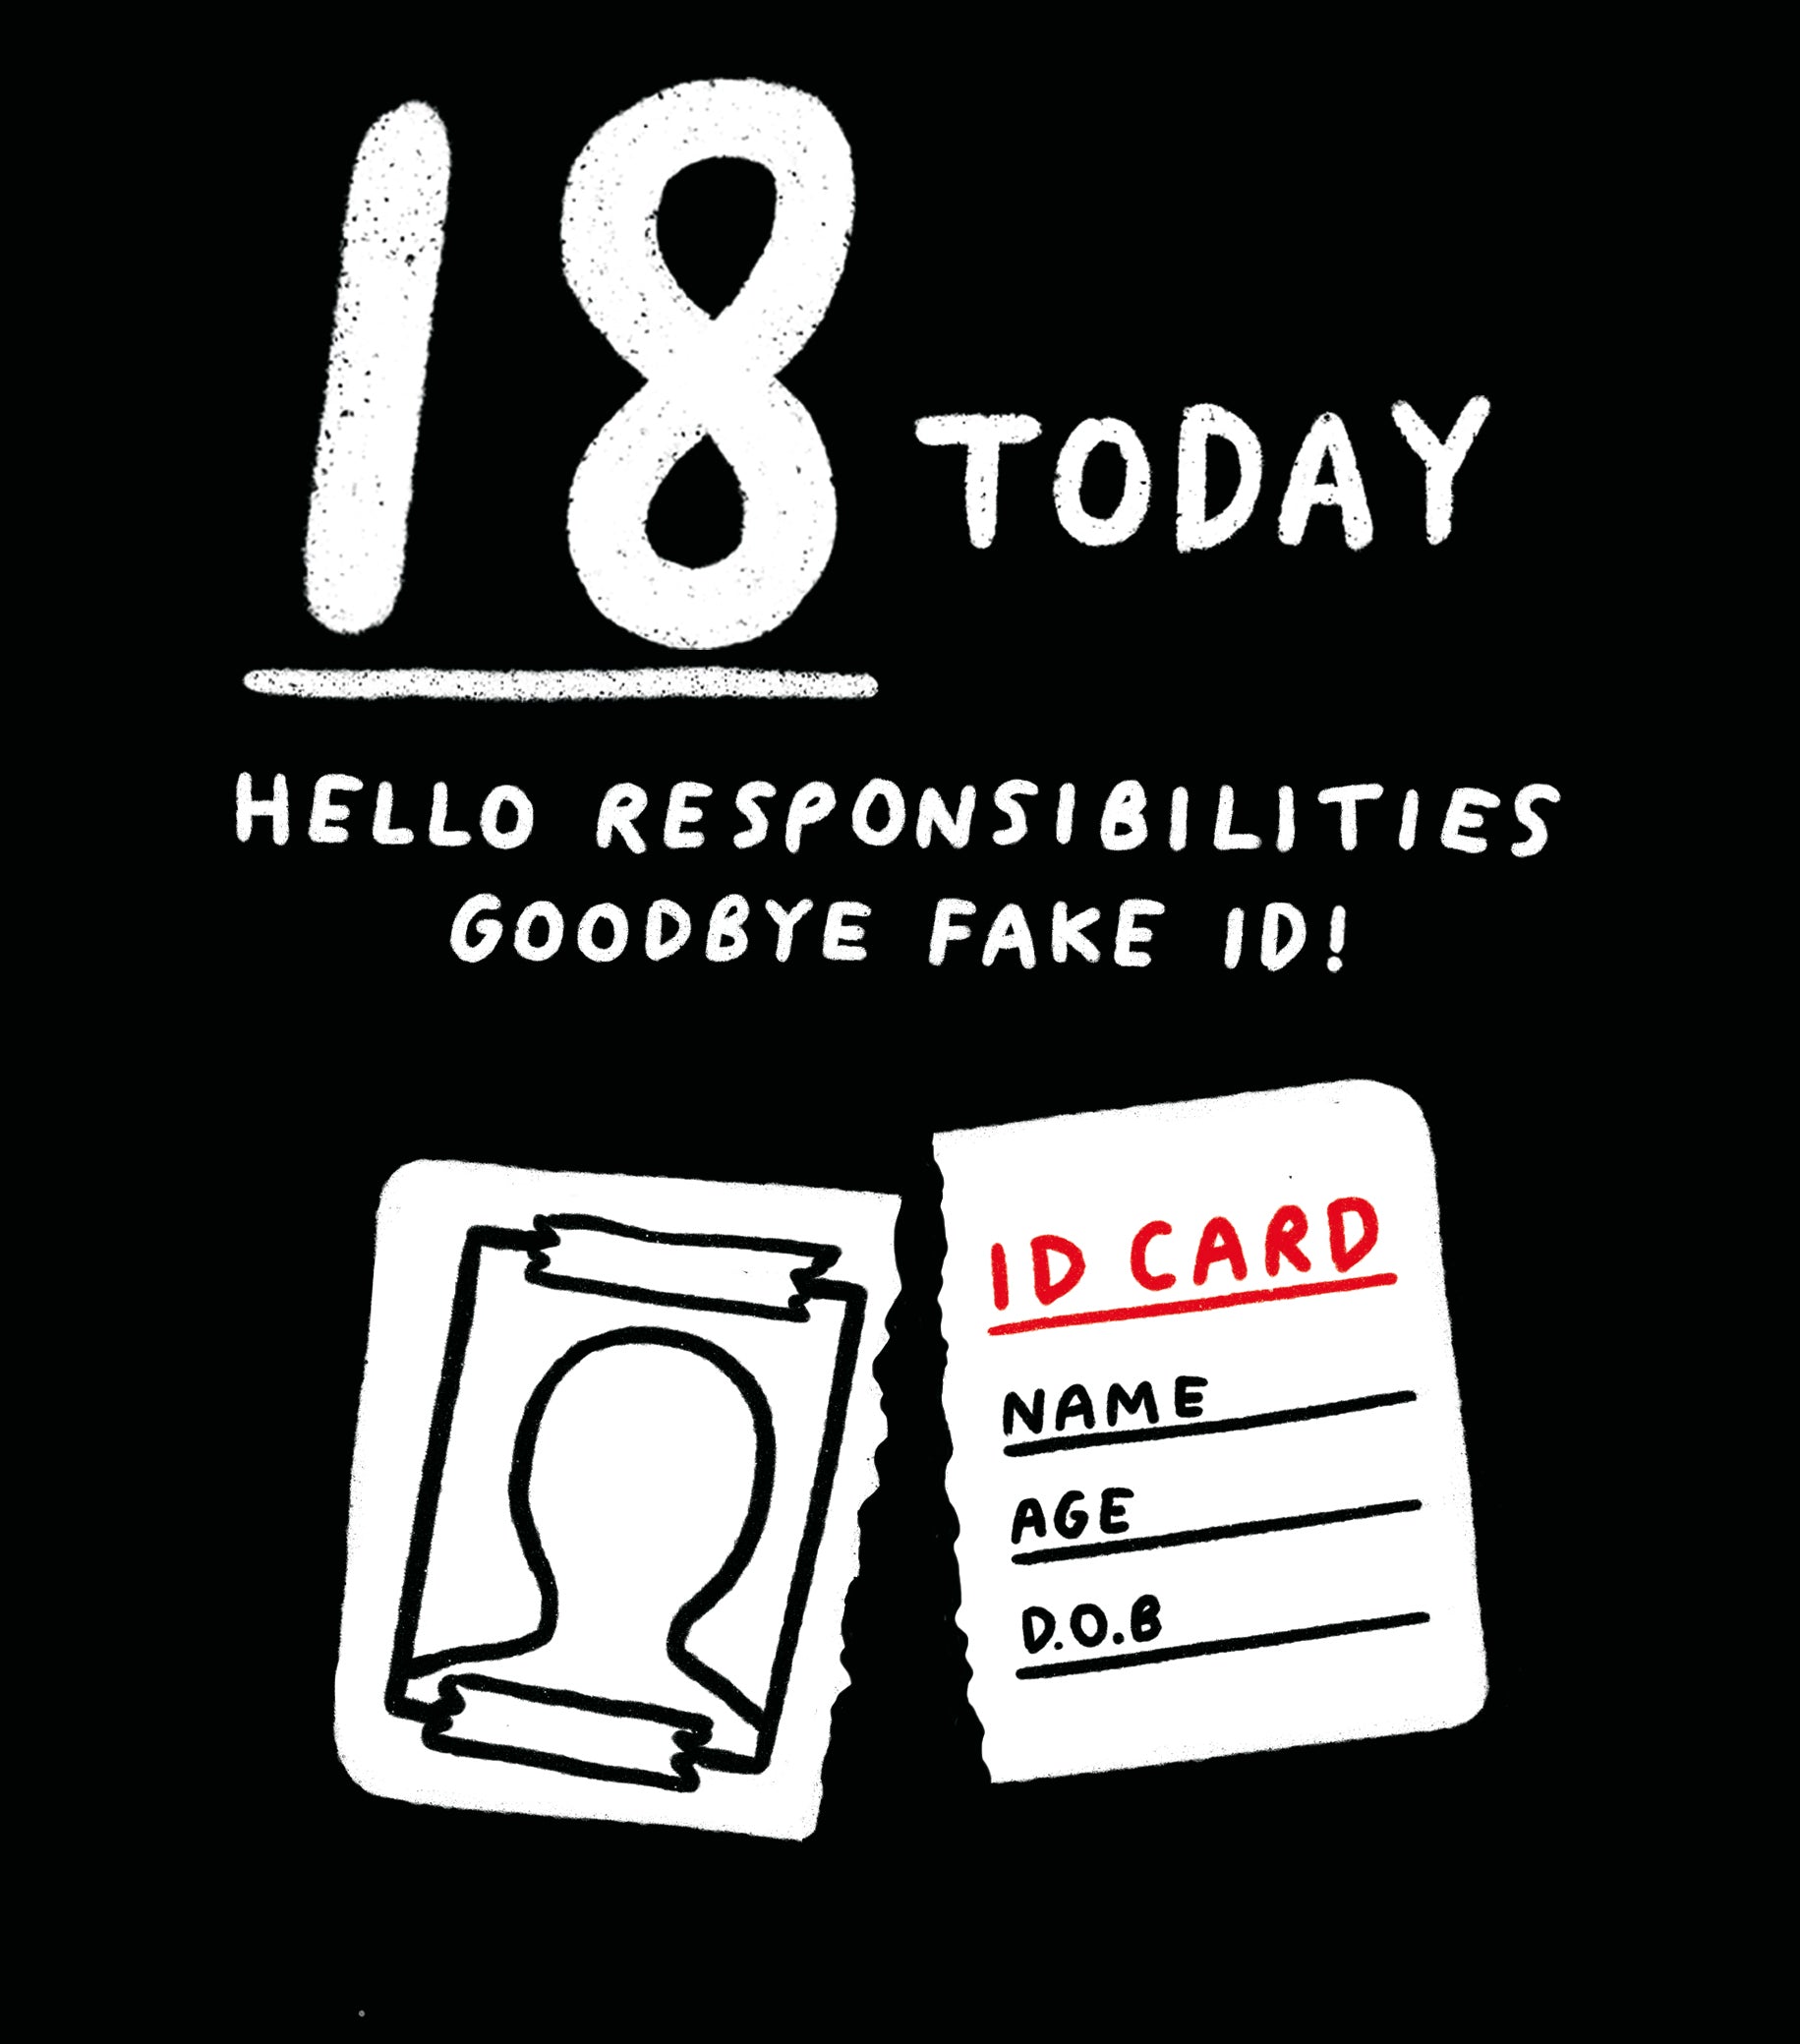 18 Goodbye Fake ID Funny Birthday Card from Penny Black